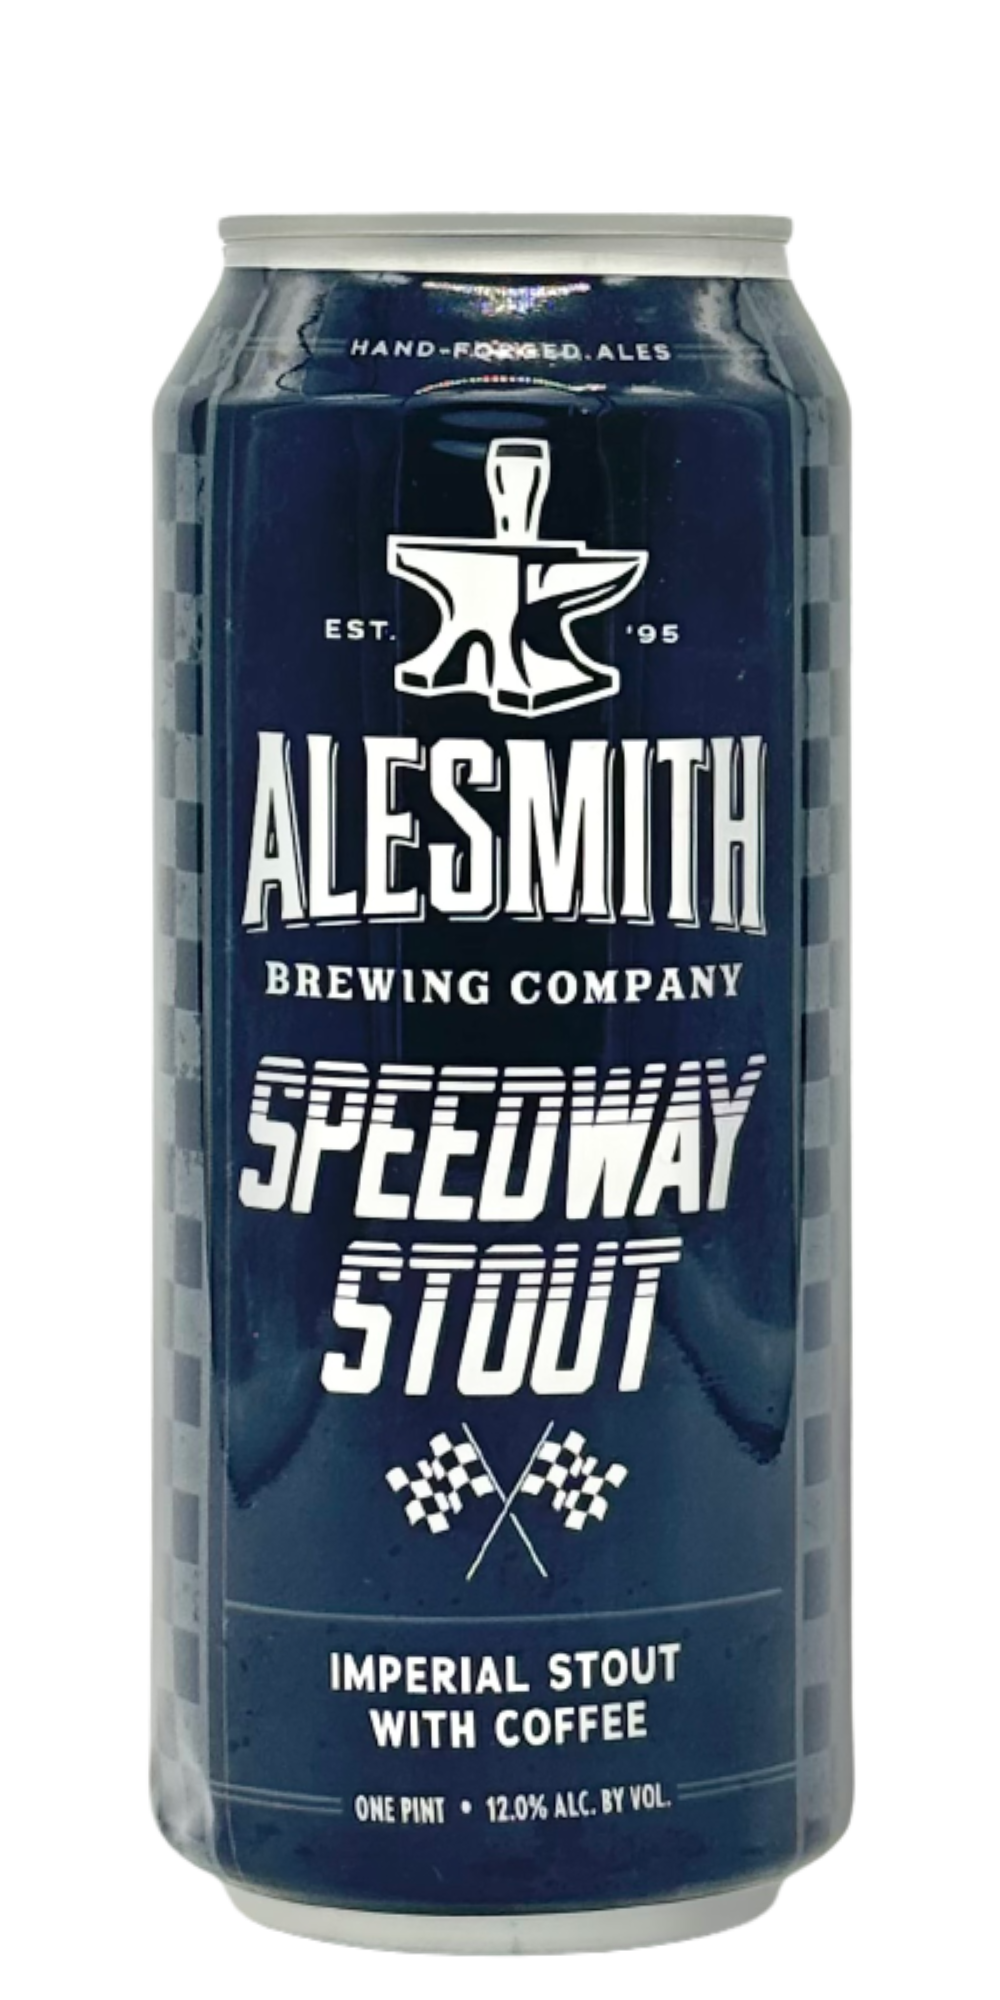 Alesmith - Speedway Stout